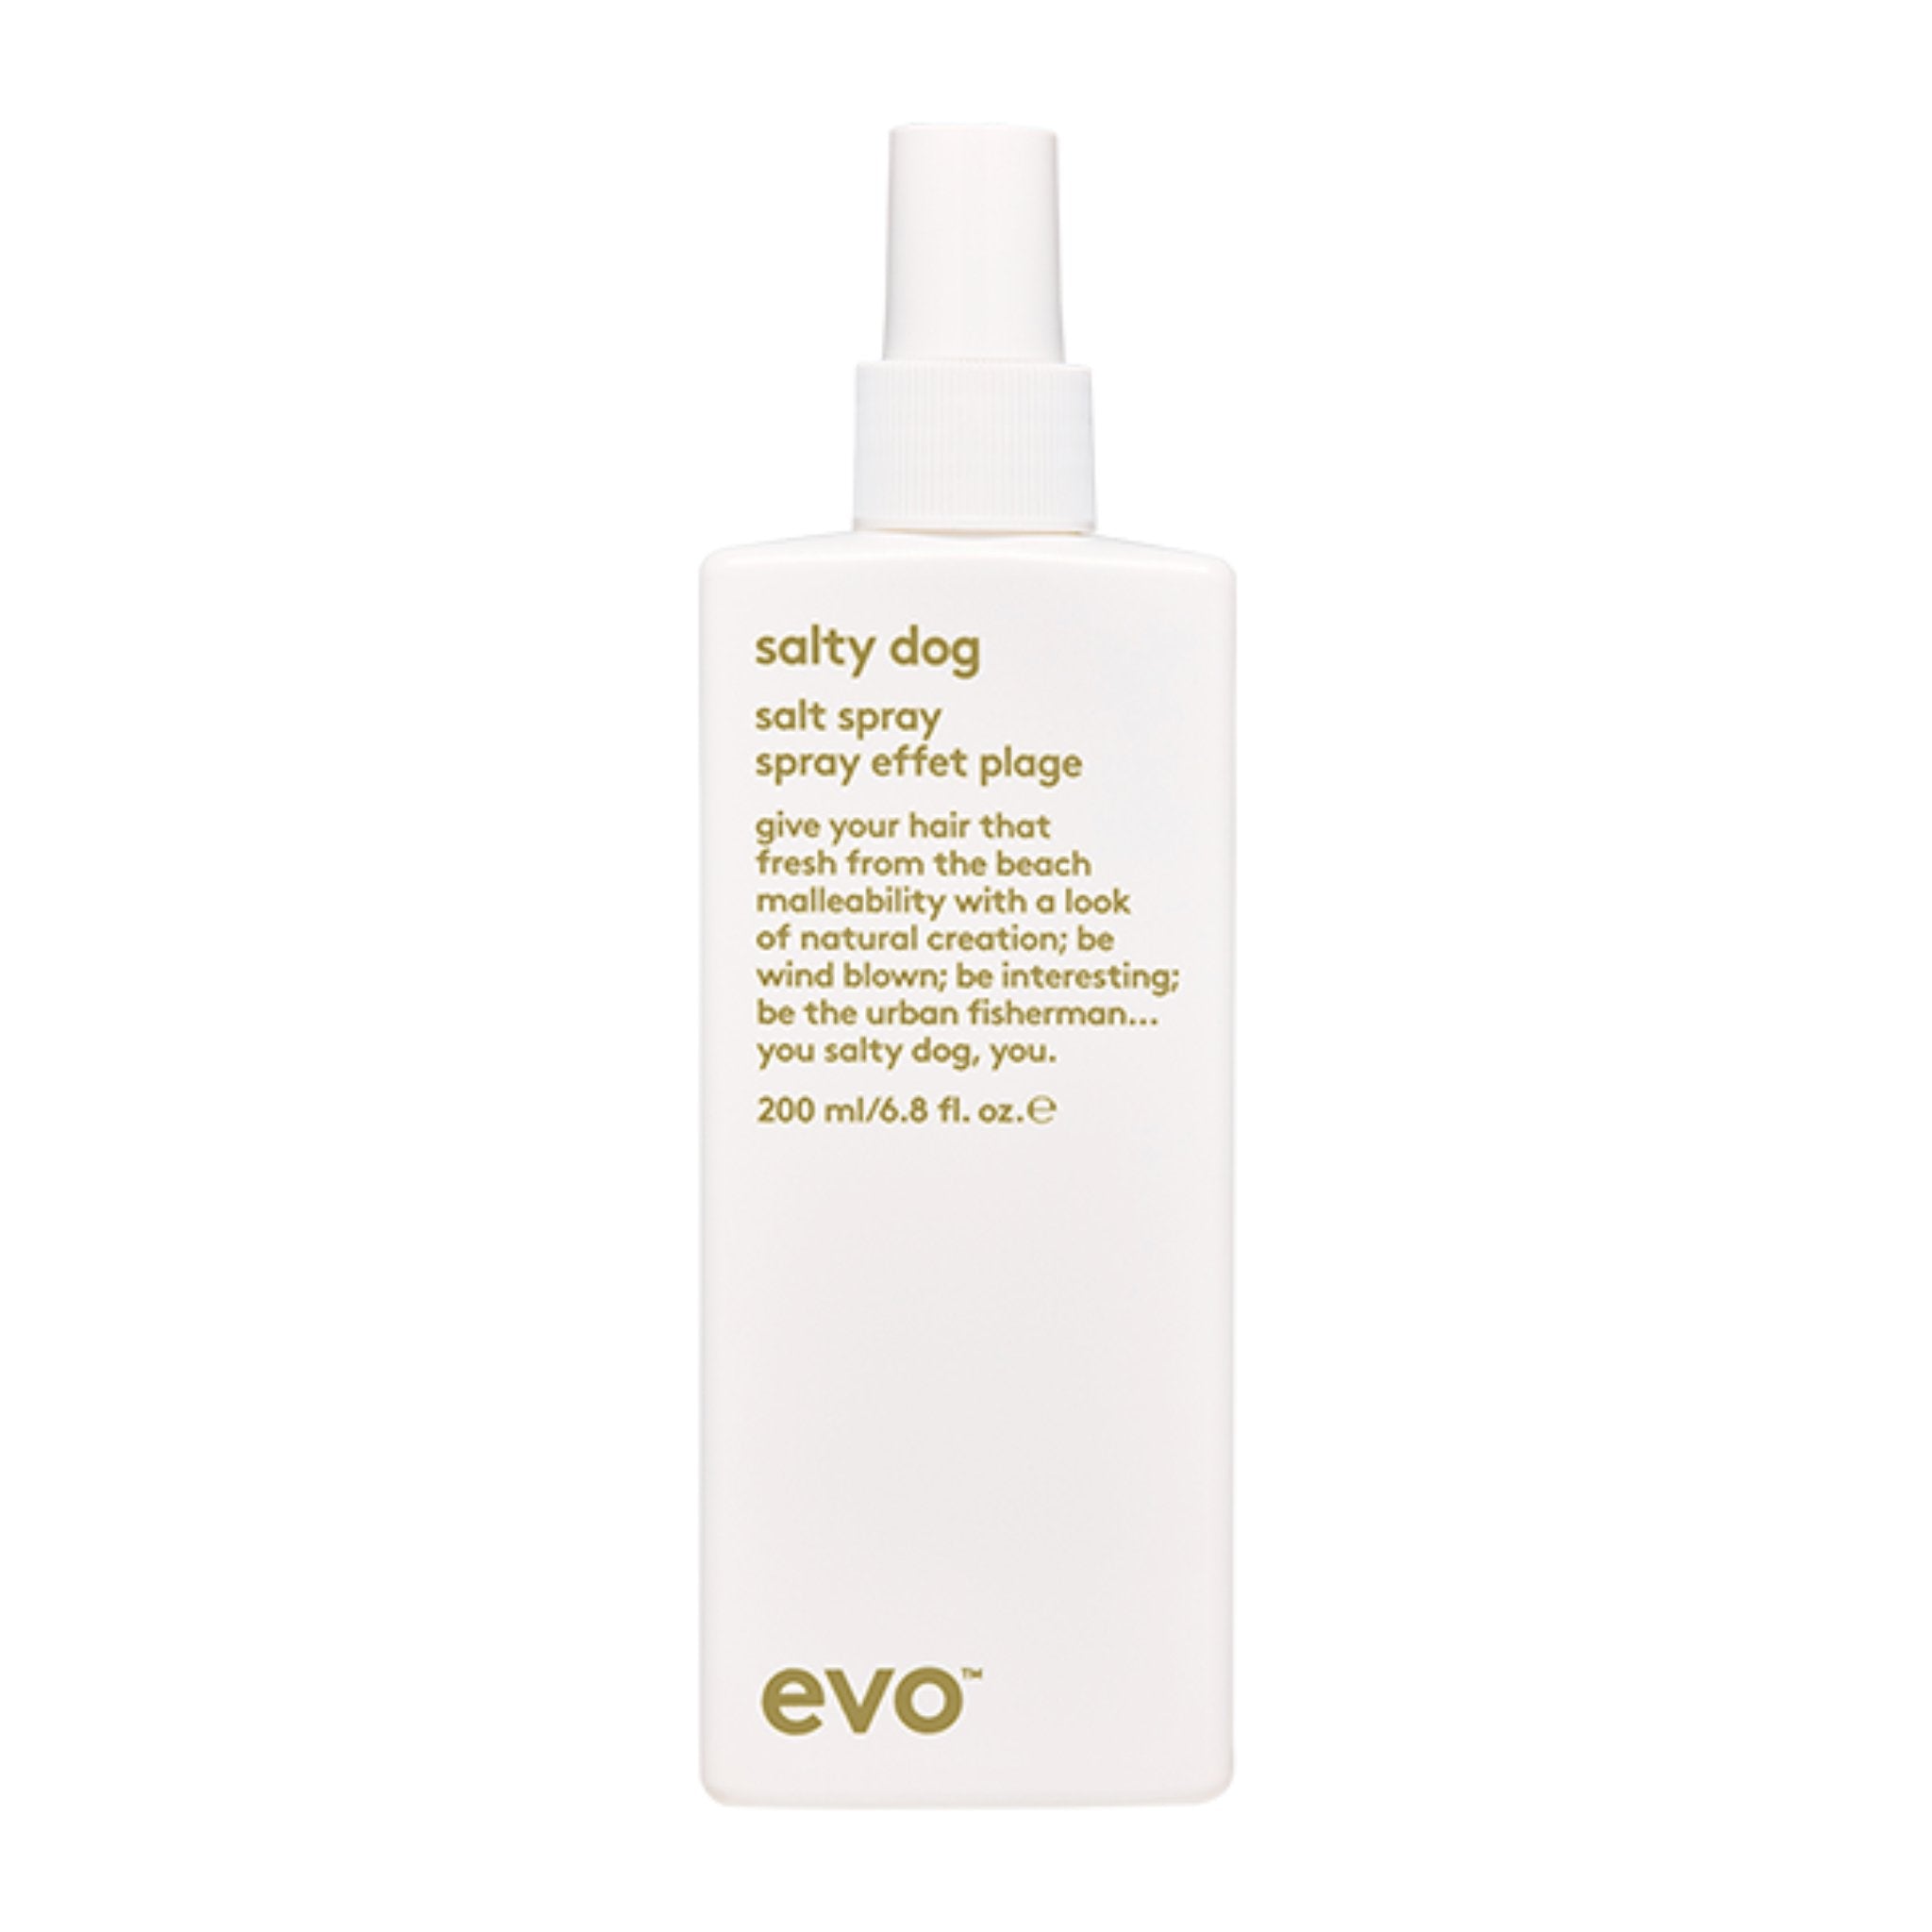 Evo. Salty Dog Spray Effet Plage - 200 ml - Concept C. Shop